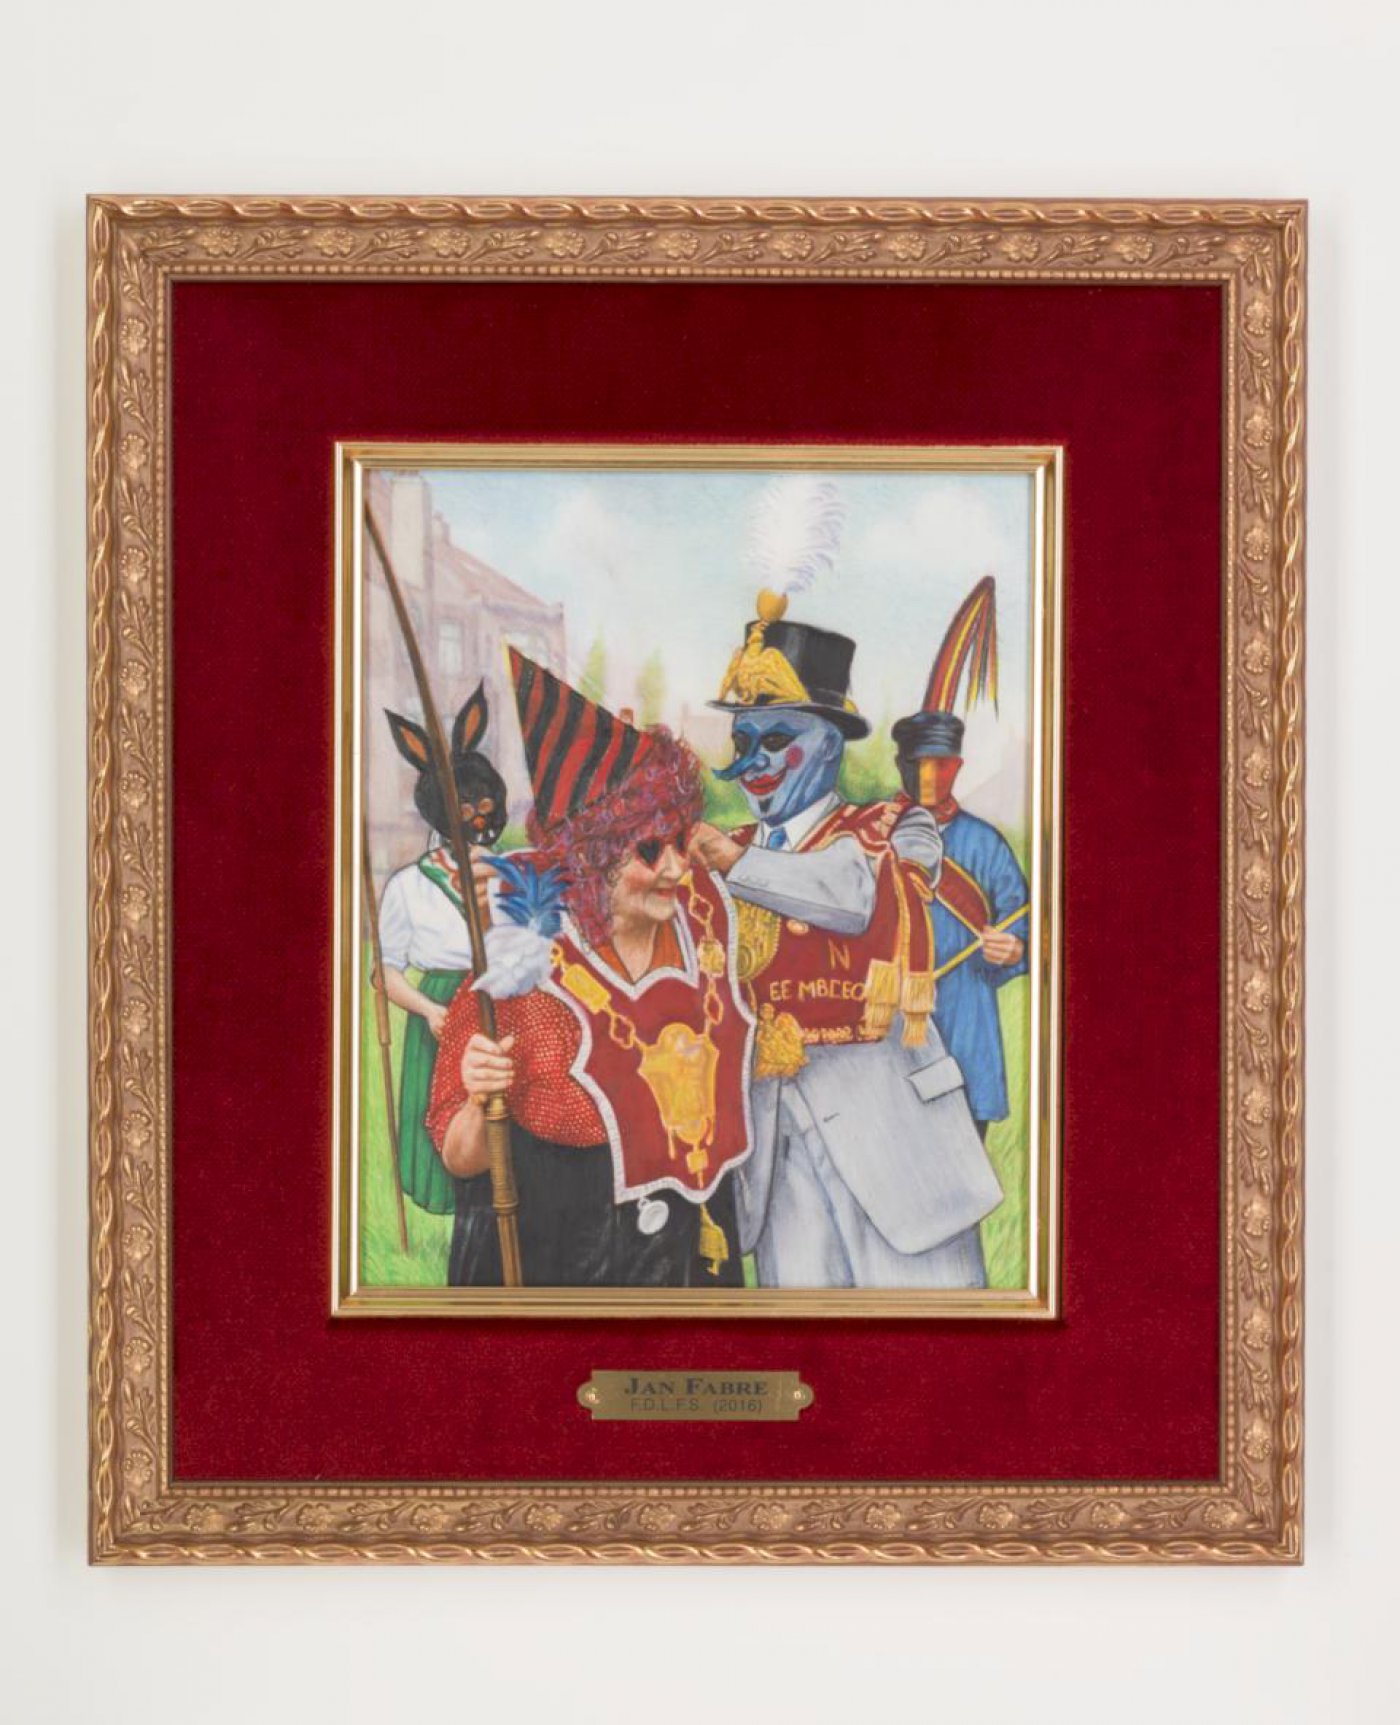 Jan Fabre: Het carnaval van de Brusselse boogschuttersgilde, 2006 - HB pencil, colour pencil and crayons on chromo, gilt frame, red velvet passe partout - 32.9 x 29.3 x 2.2 cm - `Angelos bvba